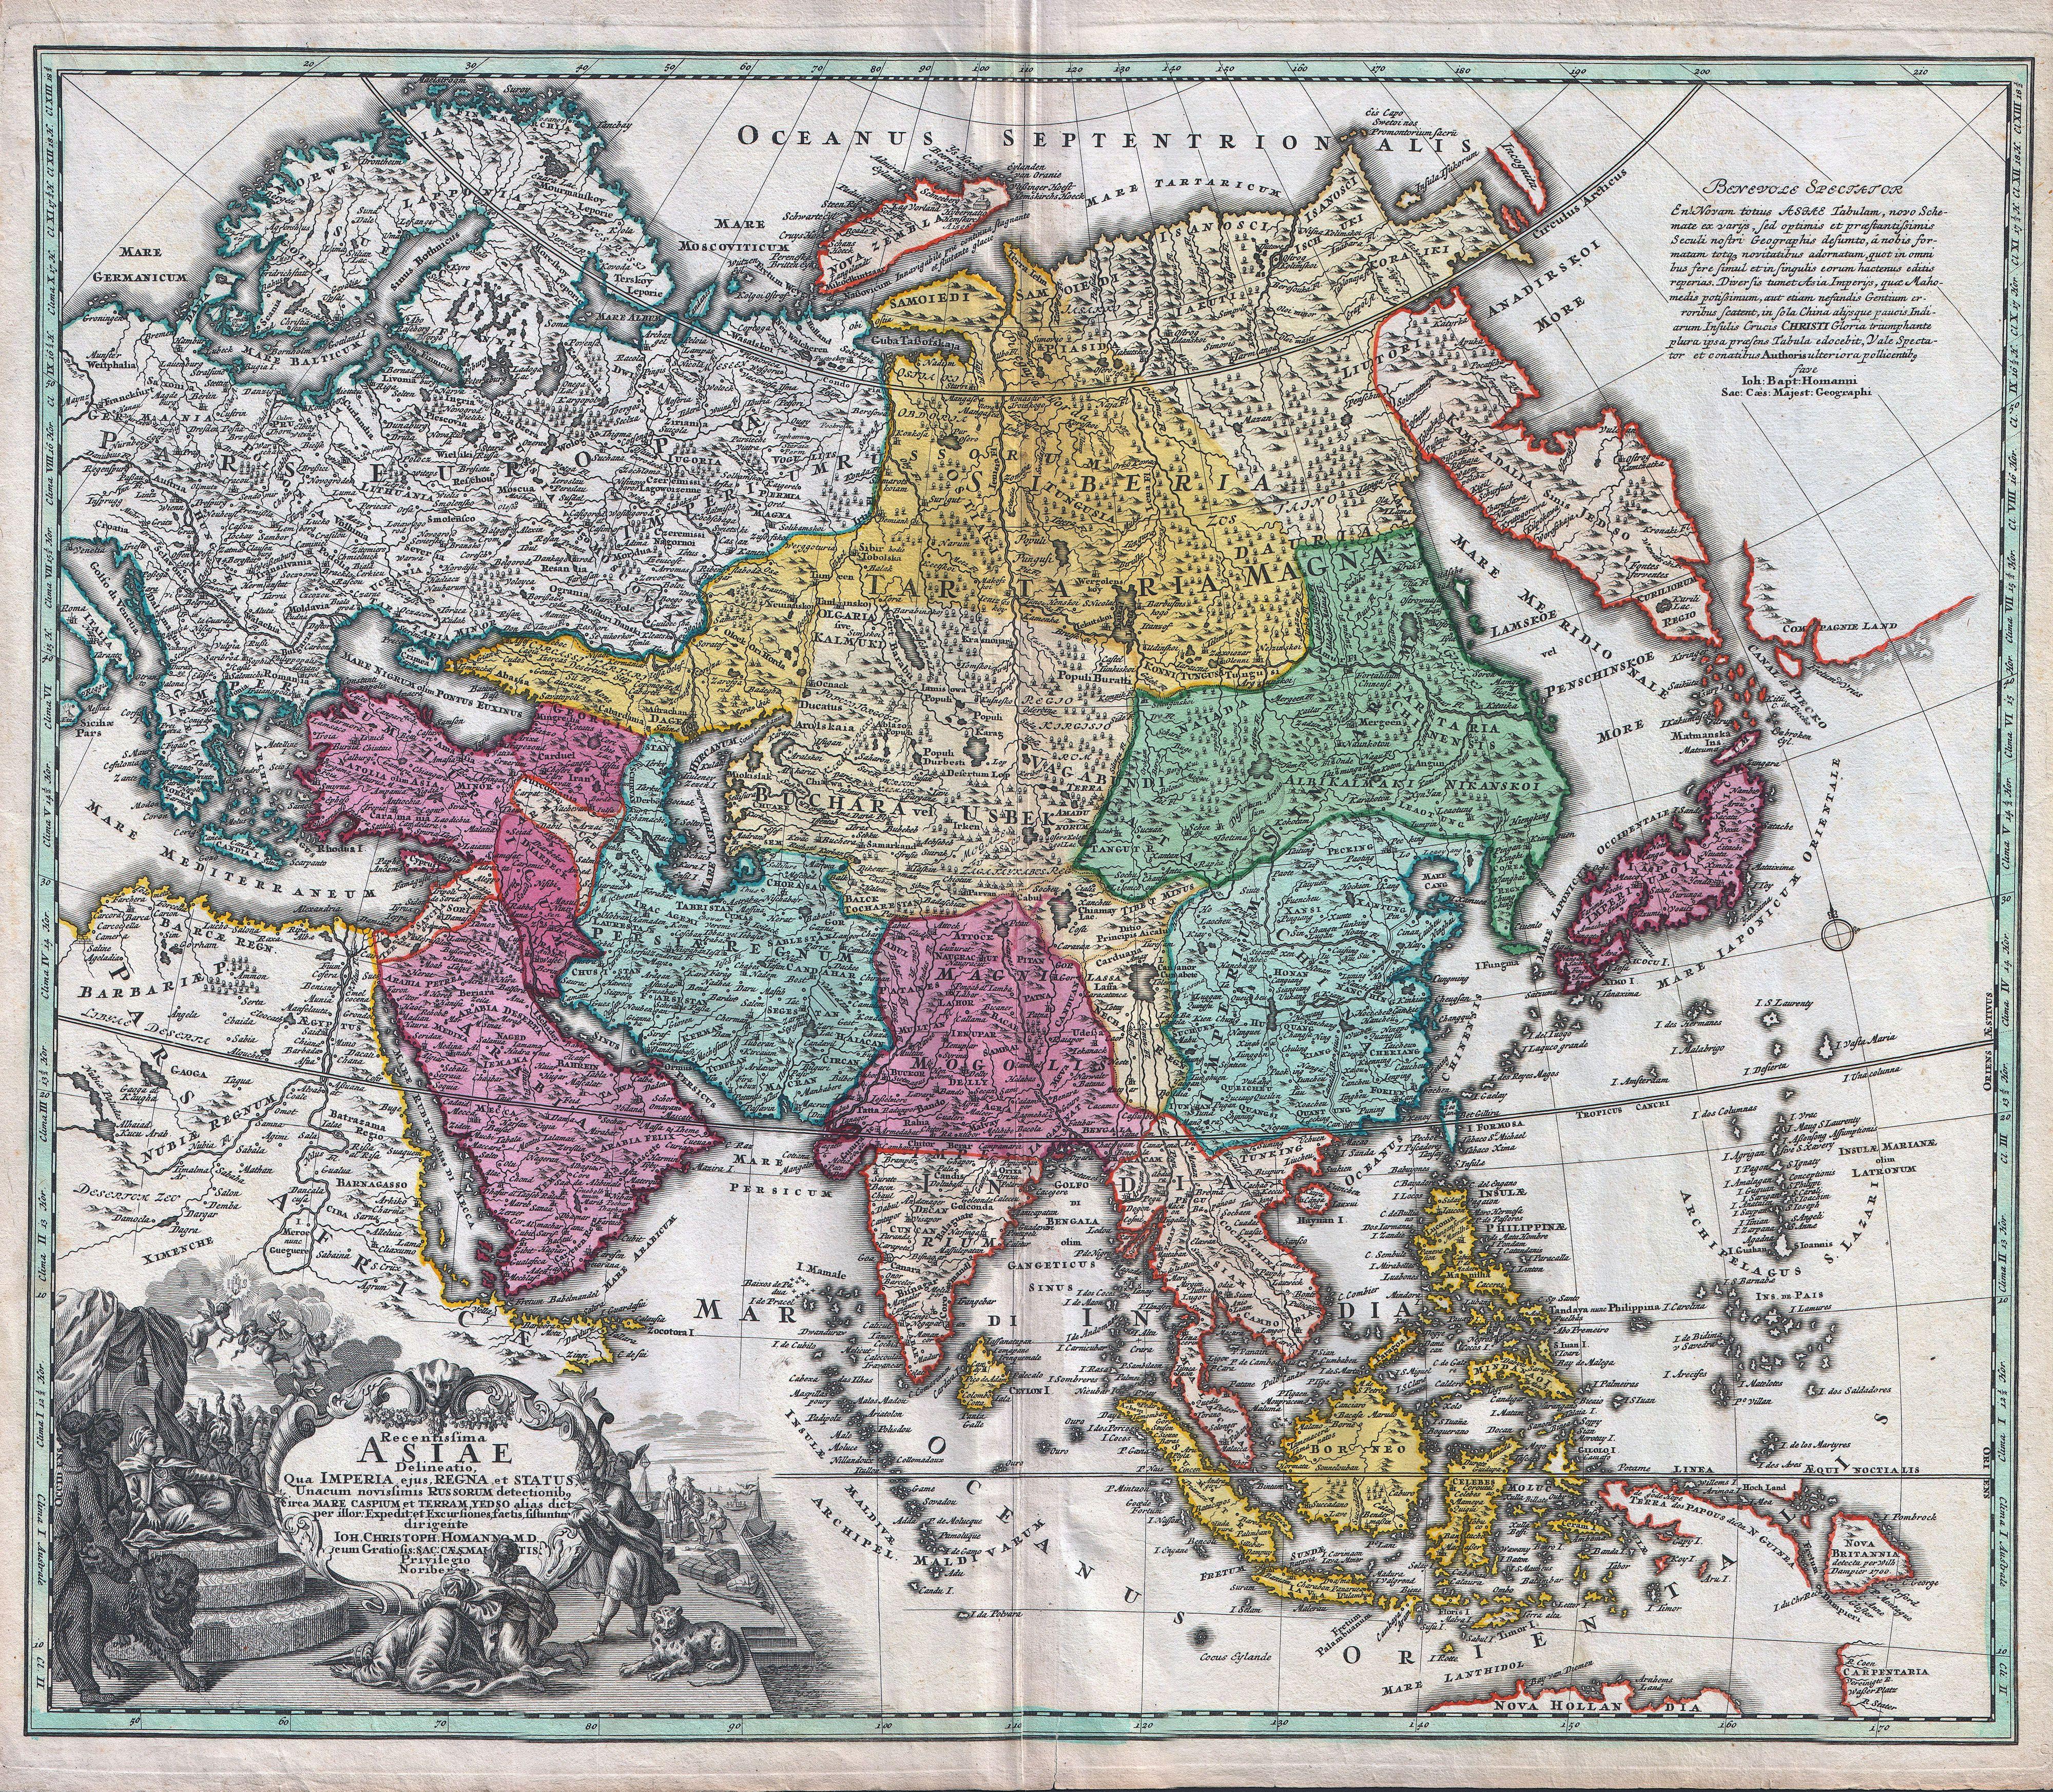 http://en.academic.ru/pictures/enwiki/49/1730_C._Homann_Map_of_Asia_-_Geographicus_-_Asiae-homann-1730.jpg